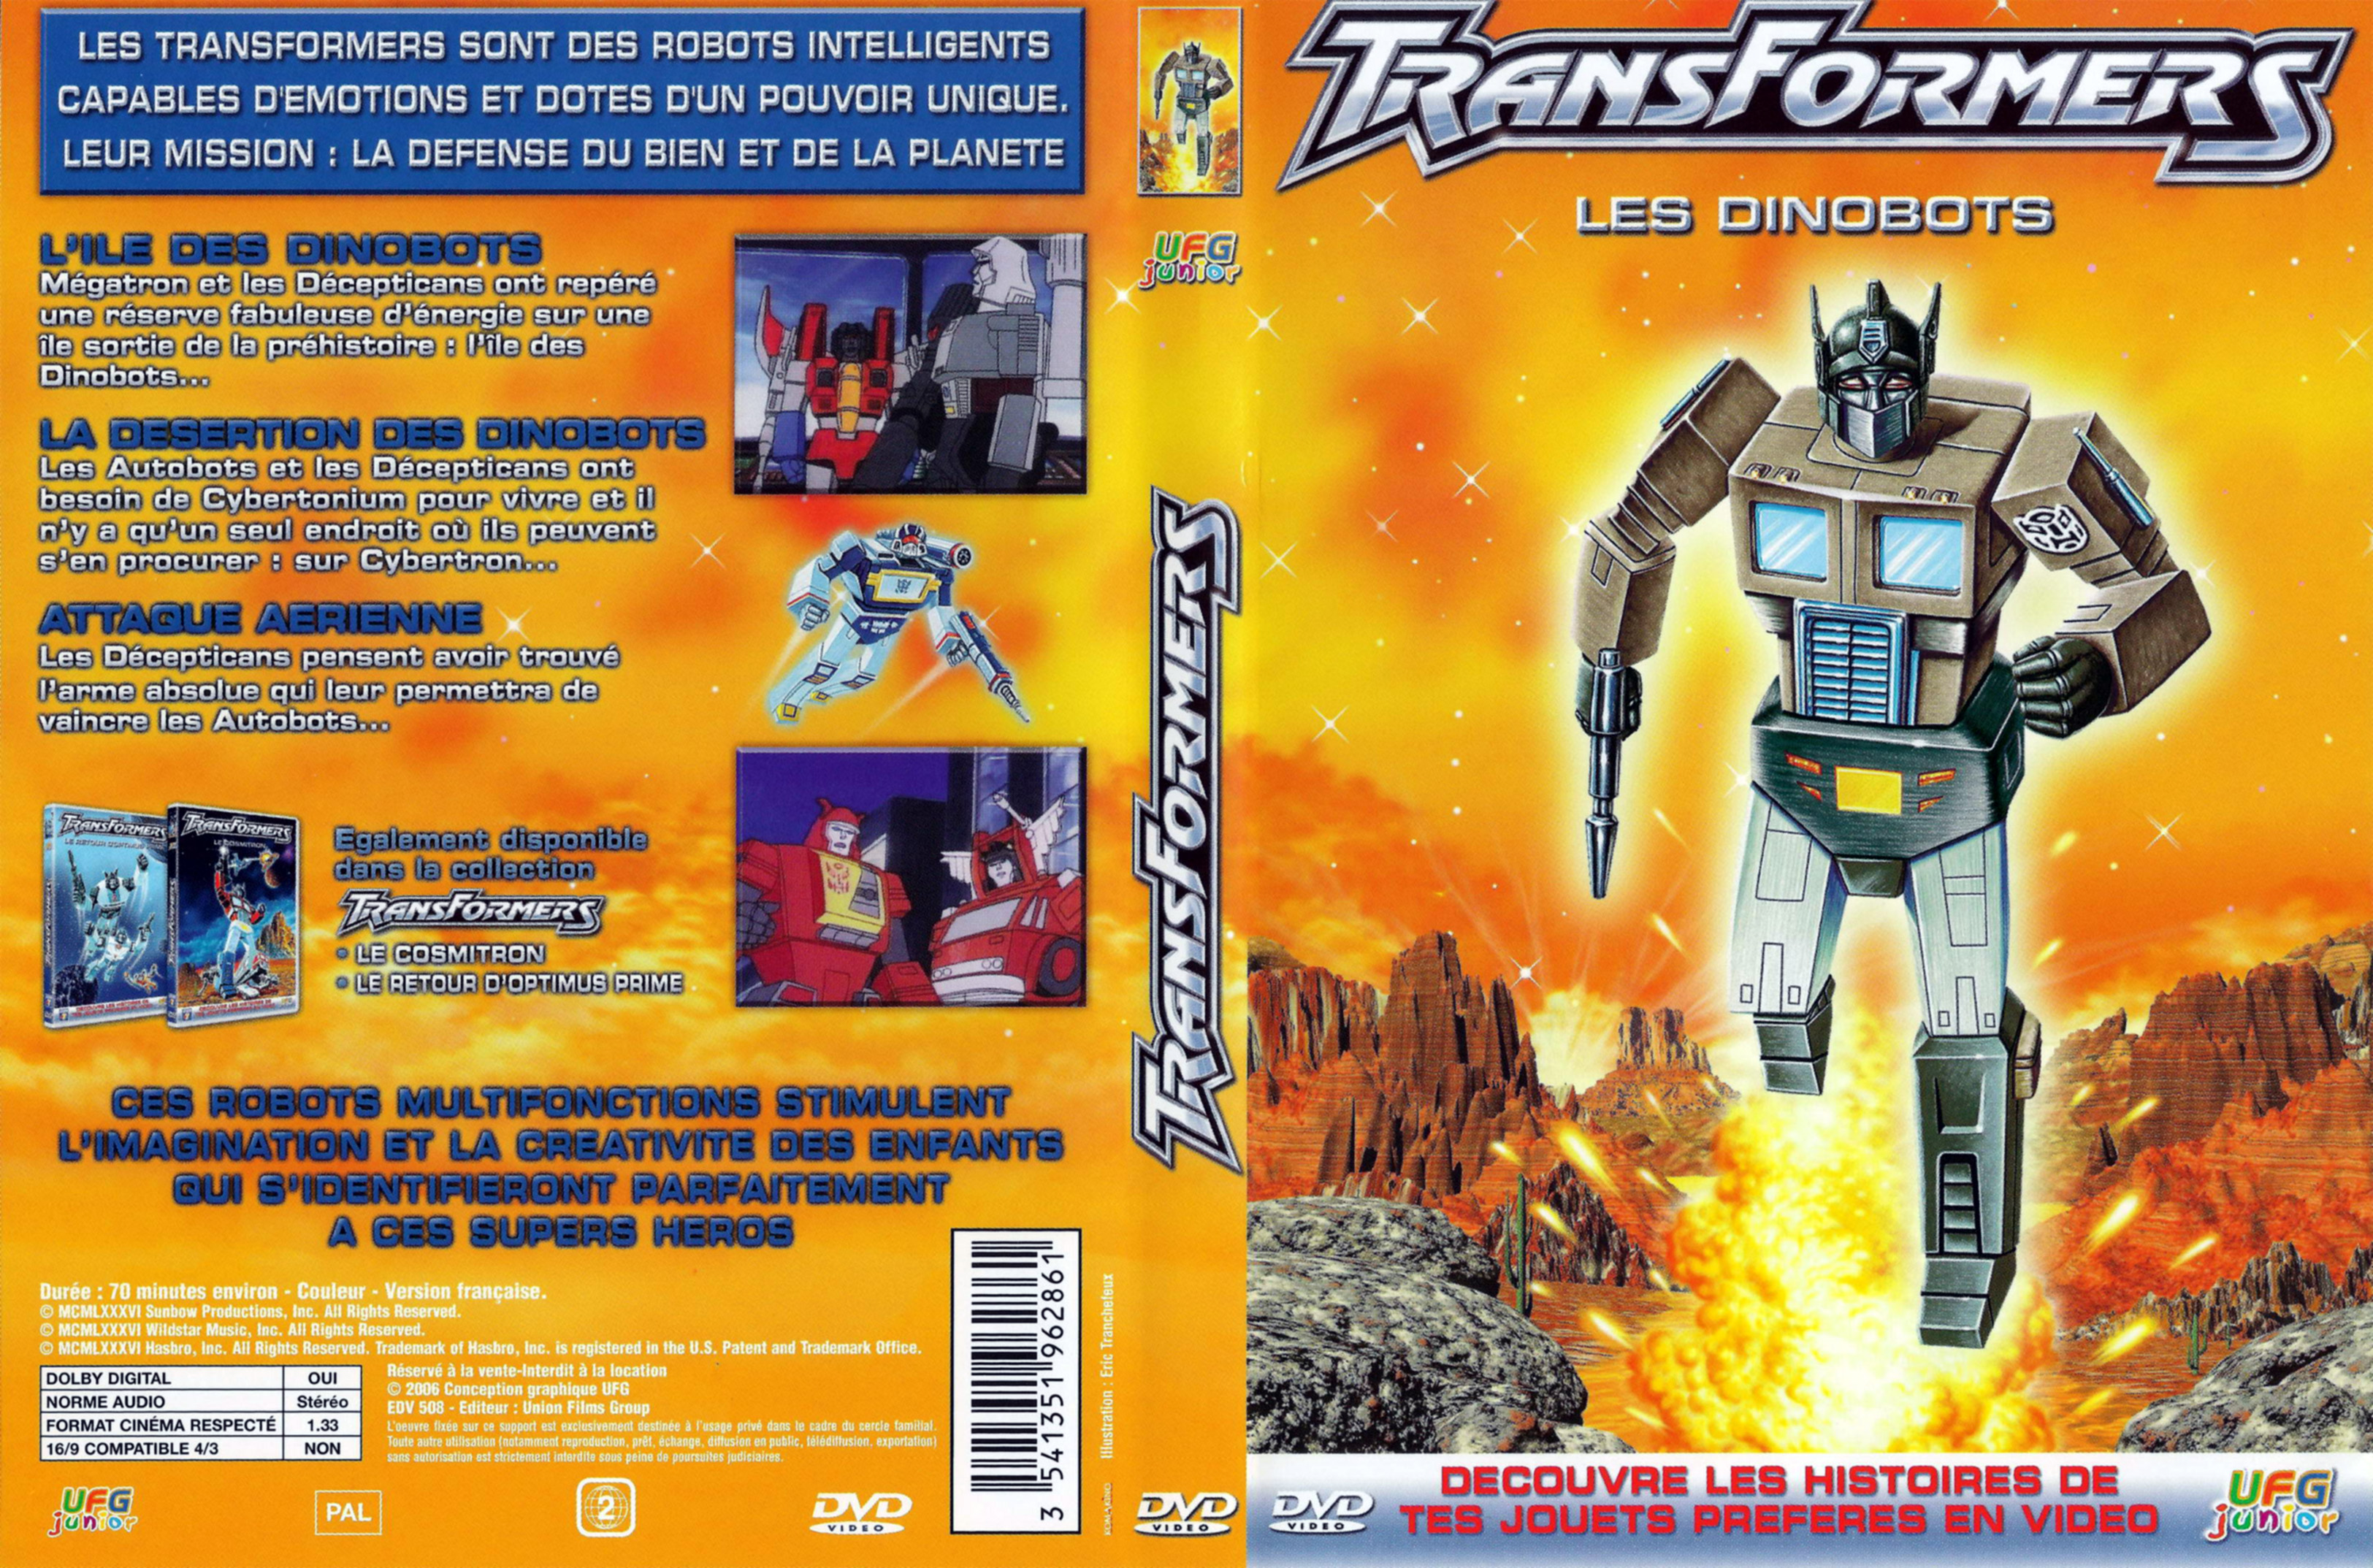 Jaquette DVD Transformers - Les dinobots